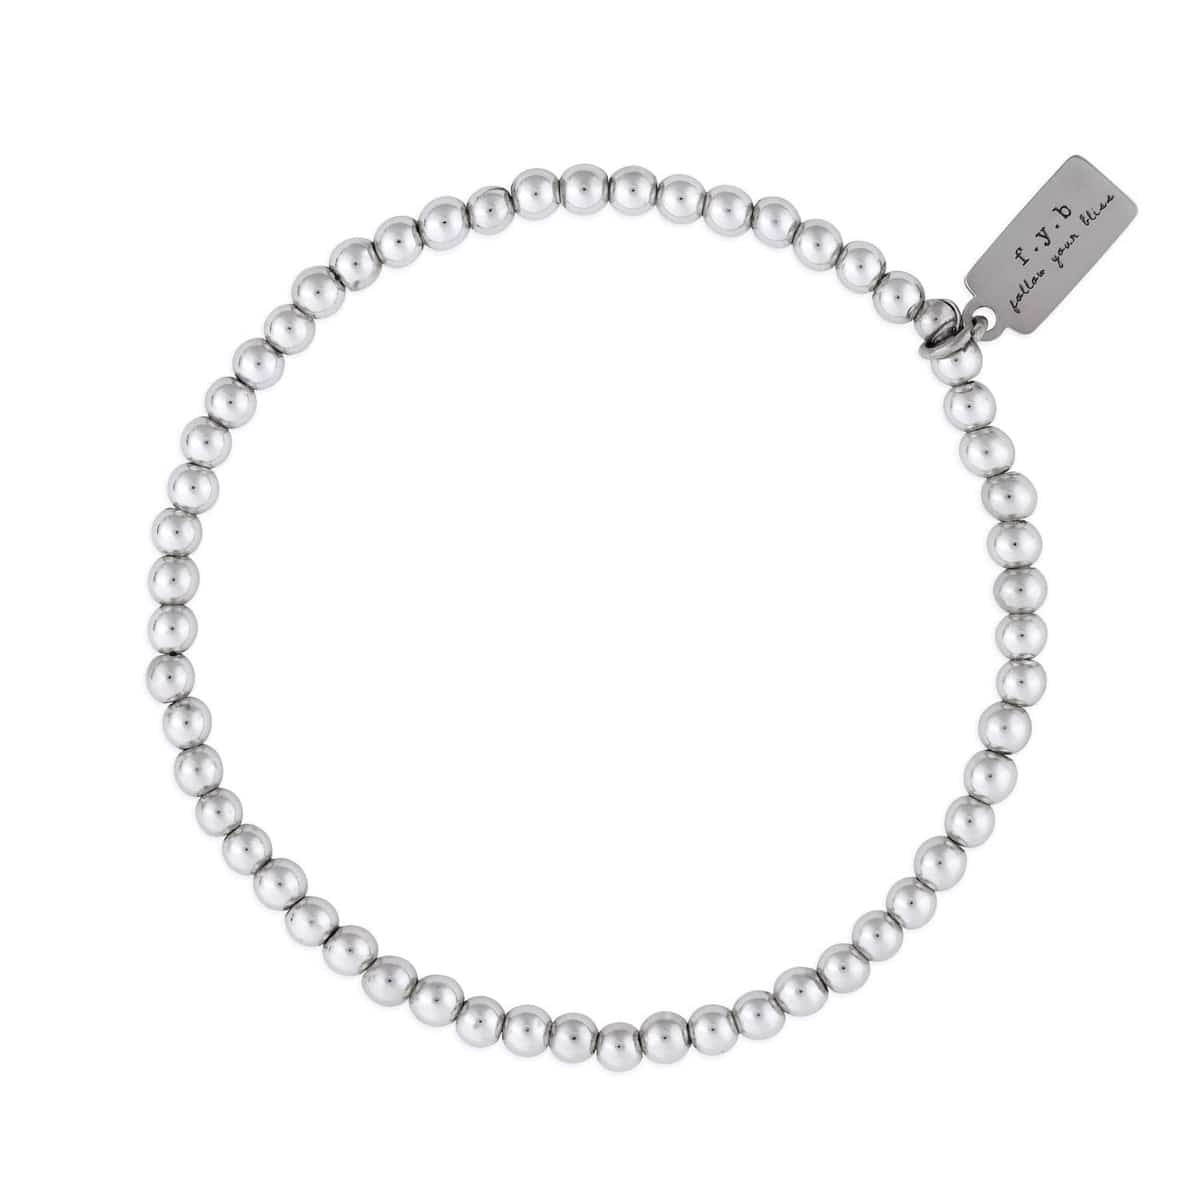 BRC Mini Silver Staple Bracelet